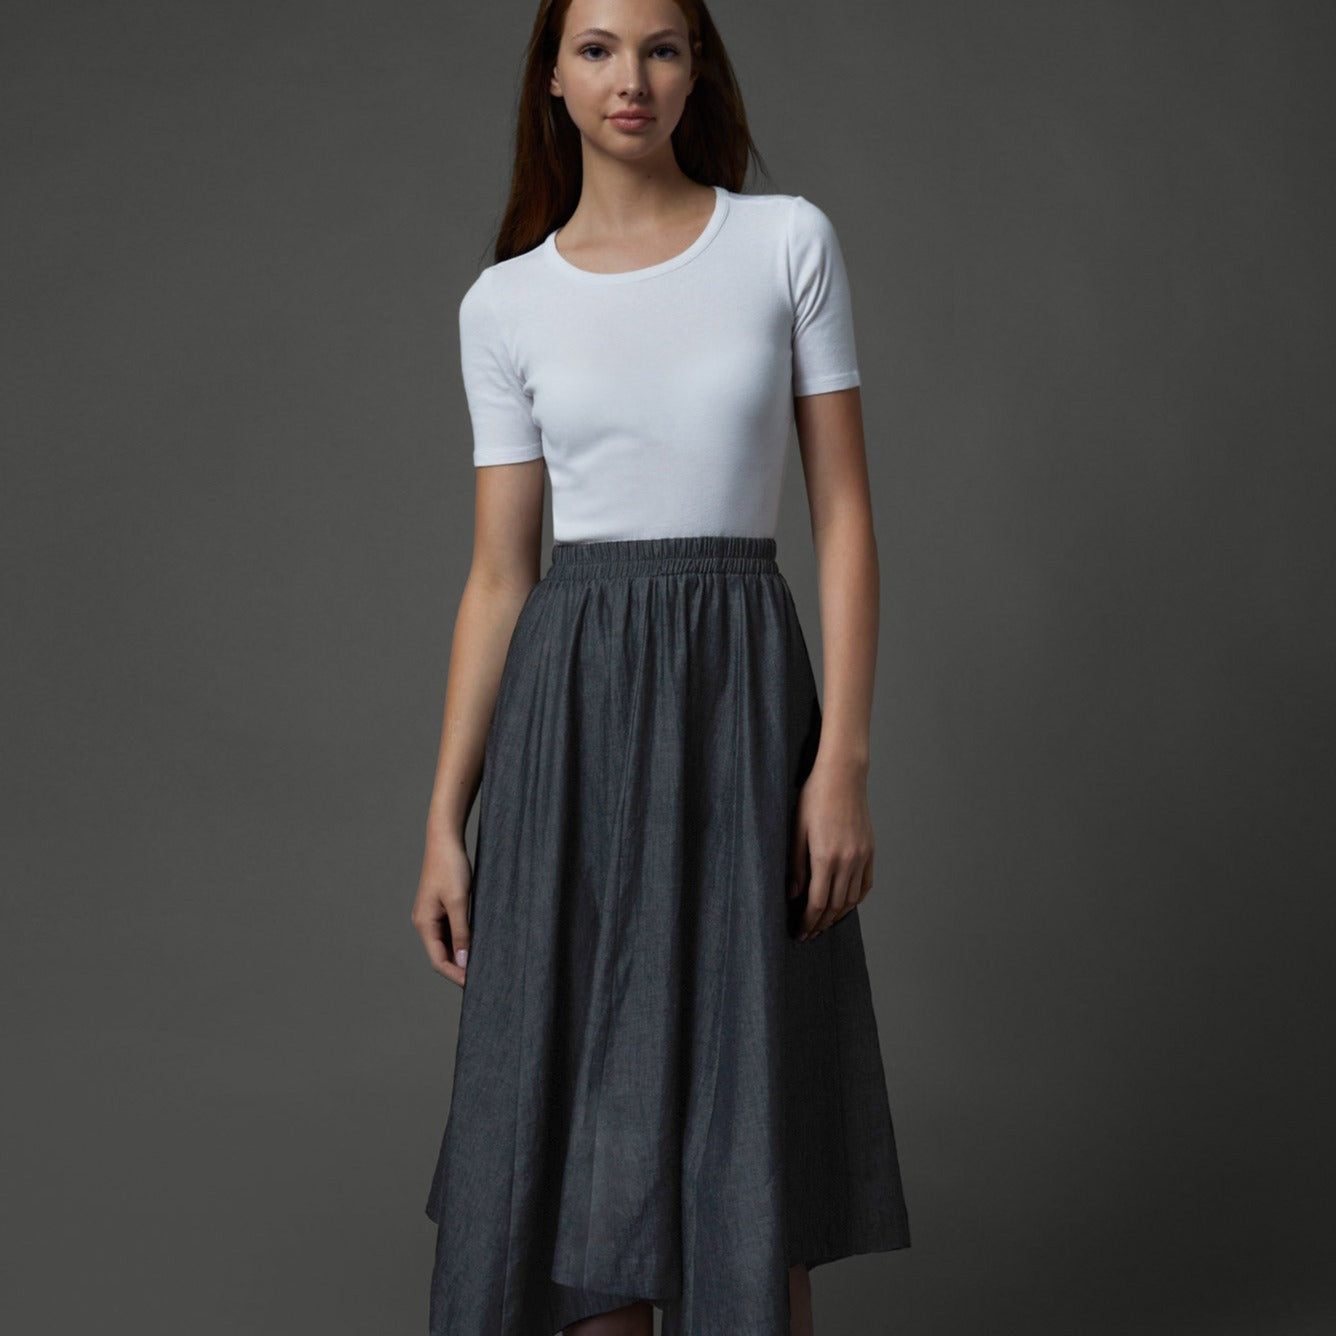 Zaikamoya Grey Denim Kerchief Skirt